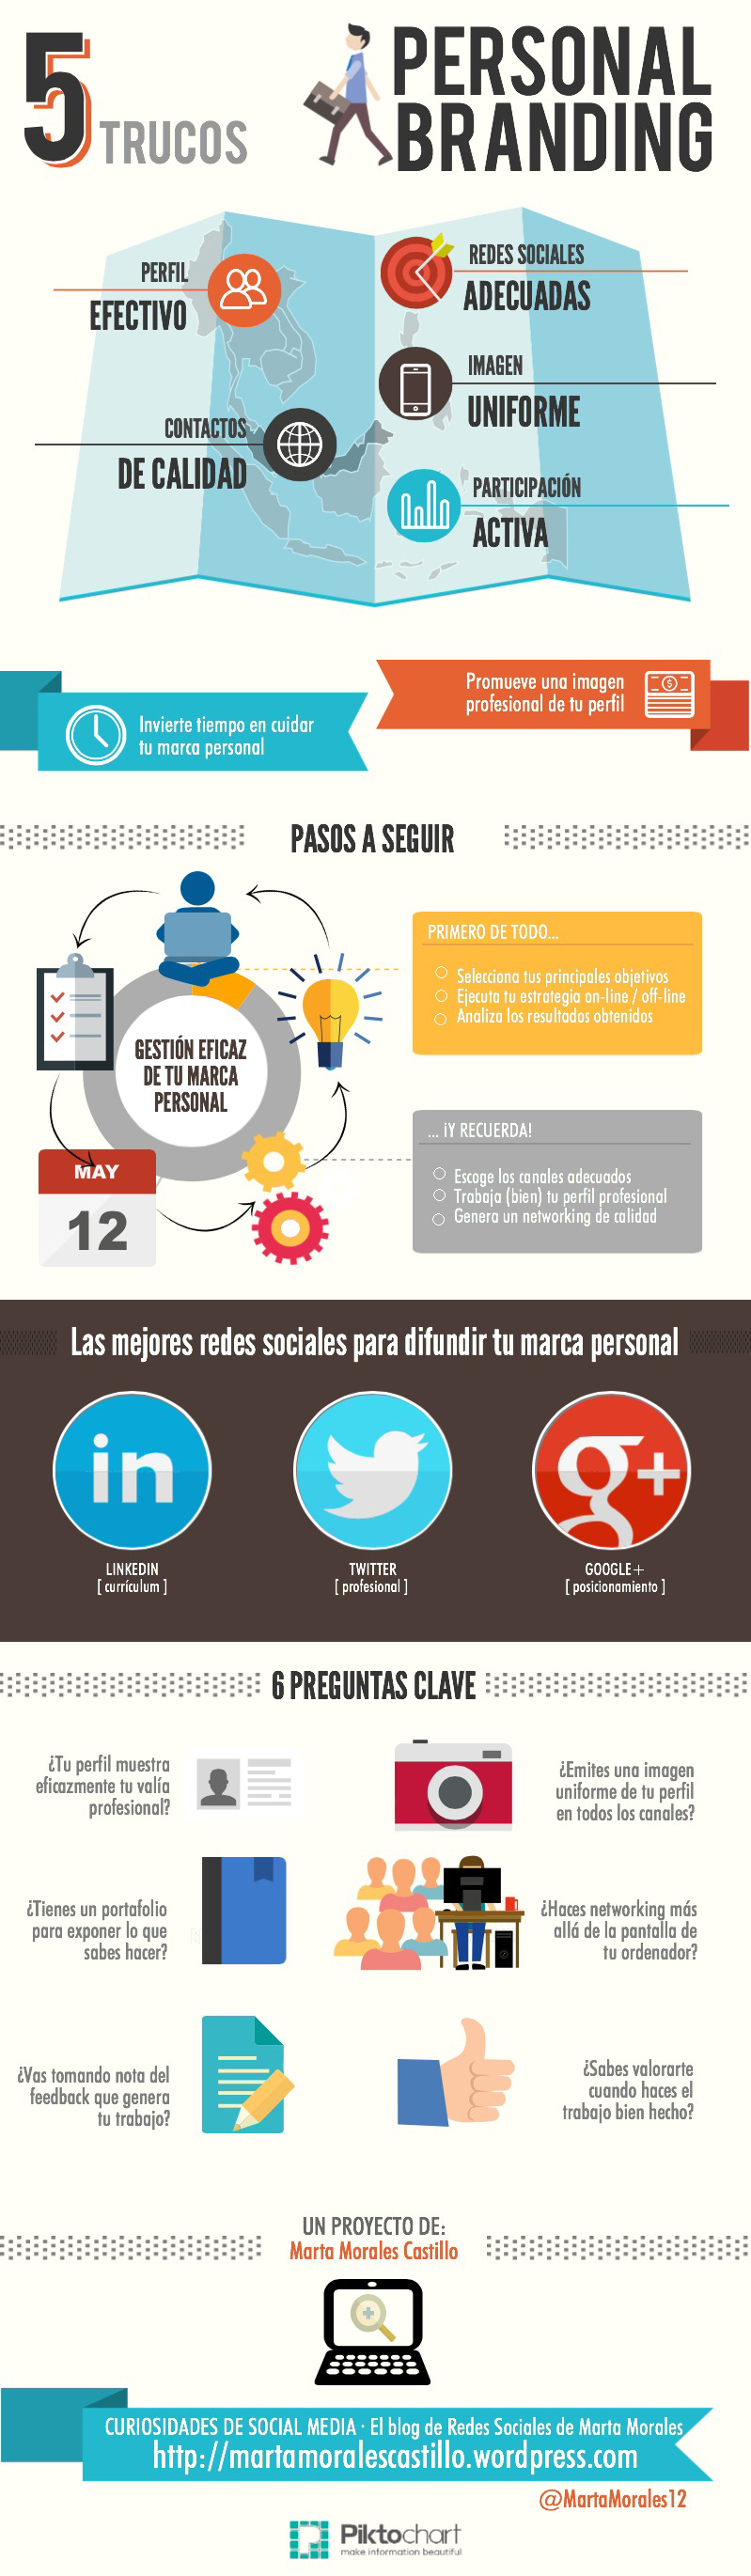 infografia personal branding marca personal redes sociales blog curiosidades social media marta morales periodista community manager